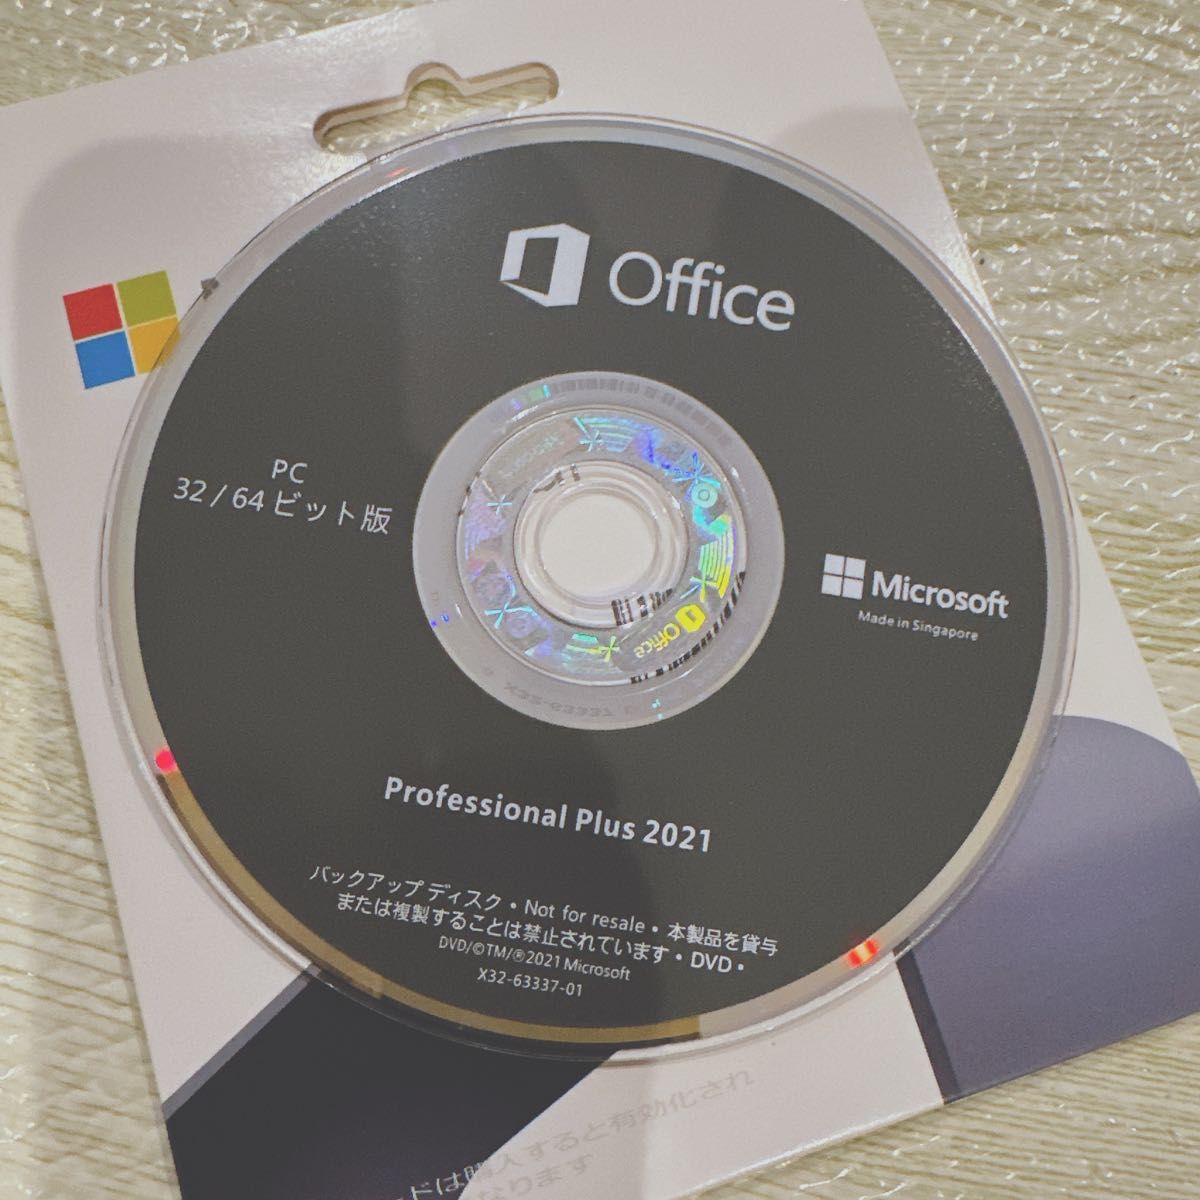 Office 2021 Professional Plus DVD プロダクトキー付き 1台PC Windows10 11